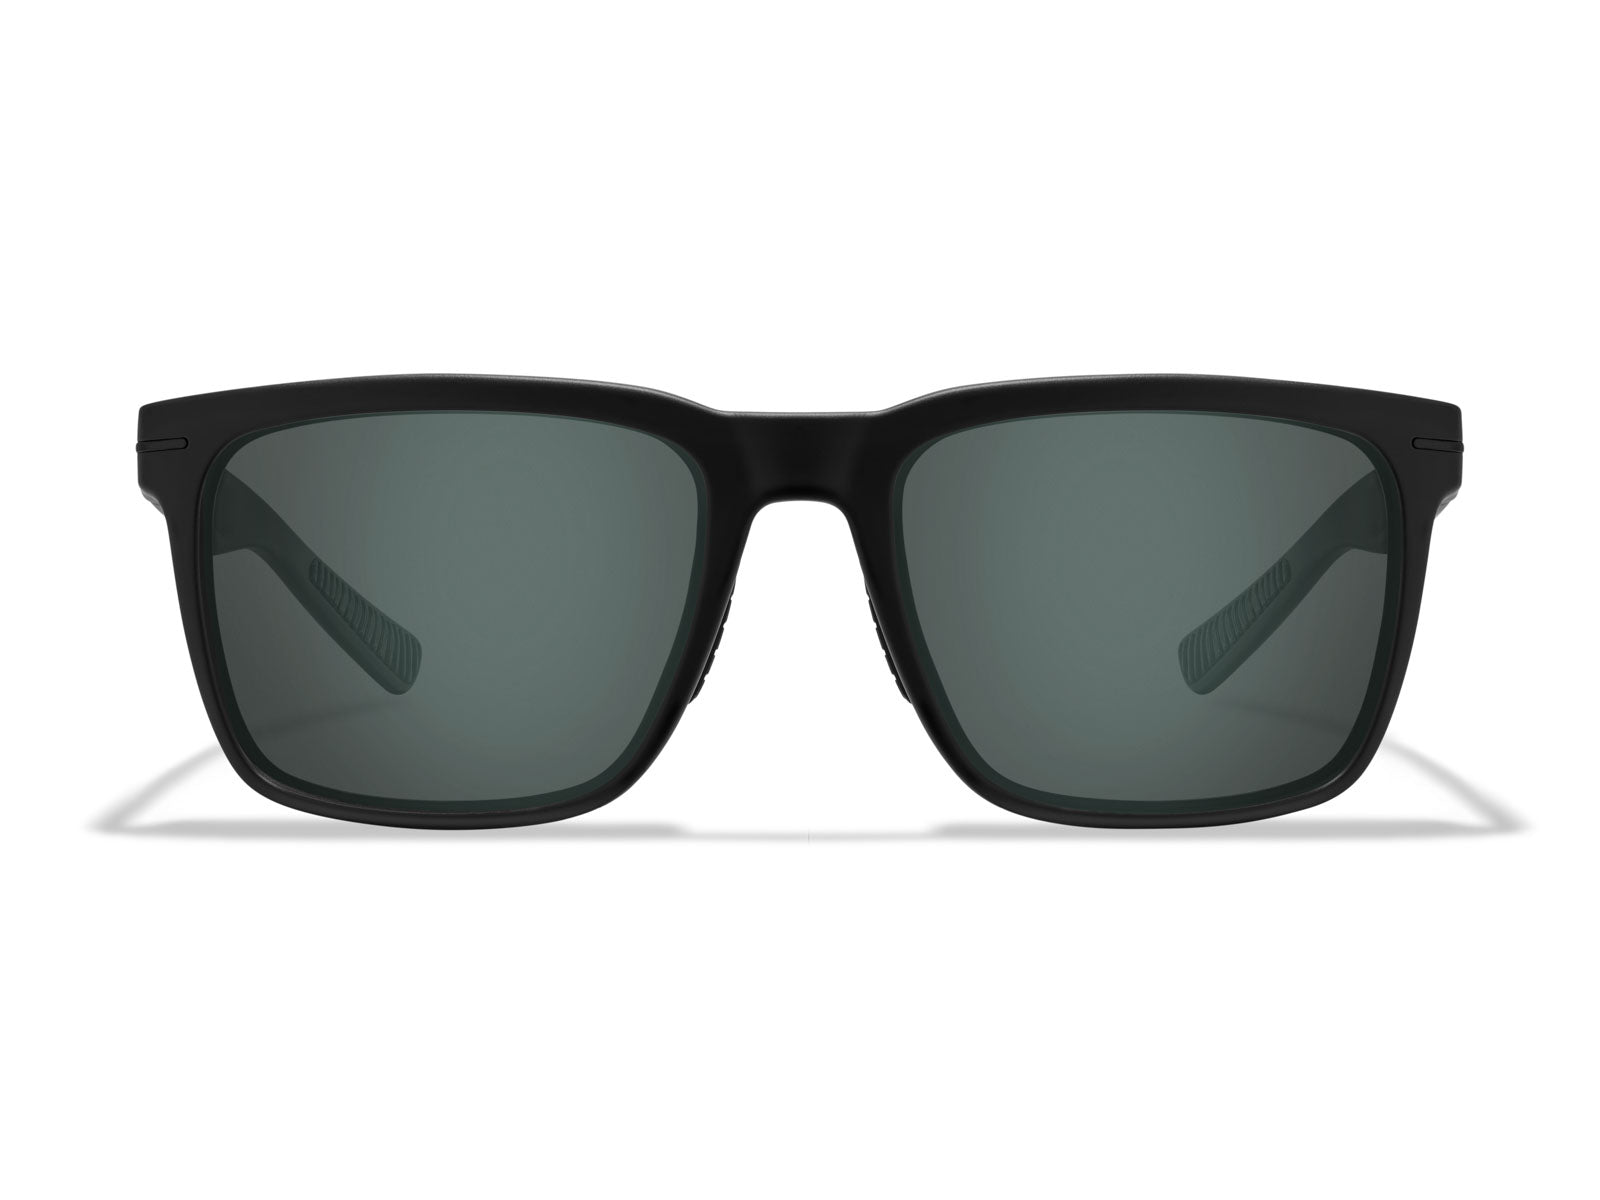 ROKA Torino Sports Performance Polarized and Non-Polarized Sunglasses for  Men and Women